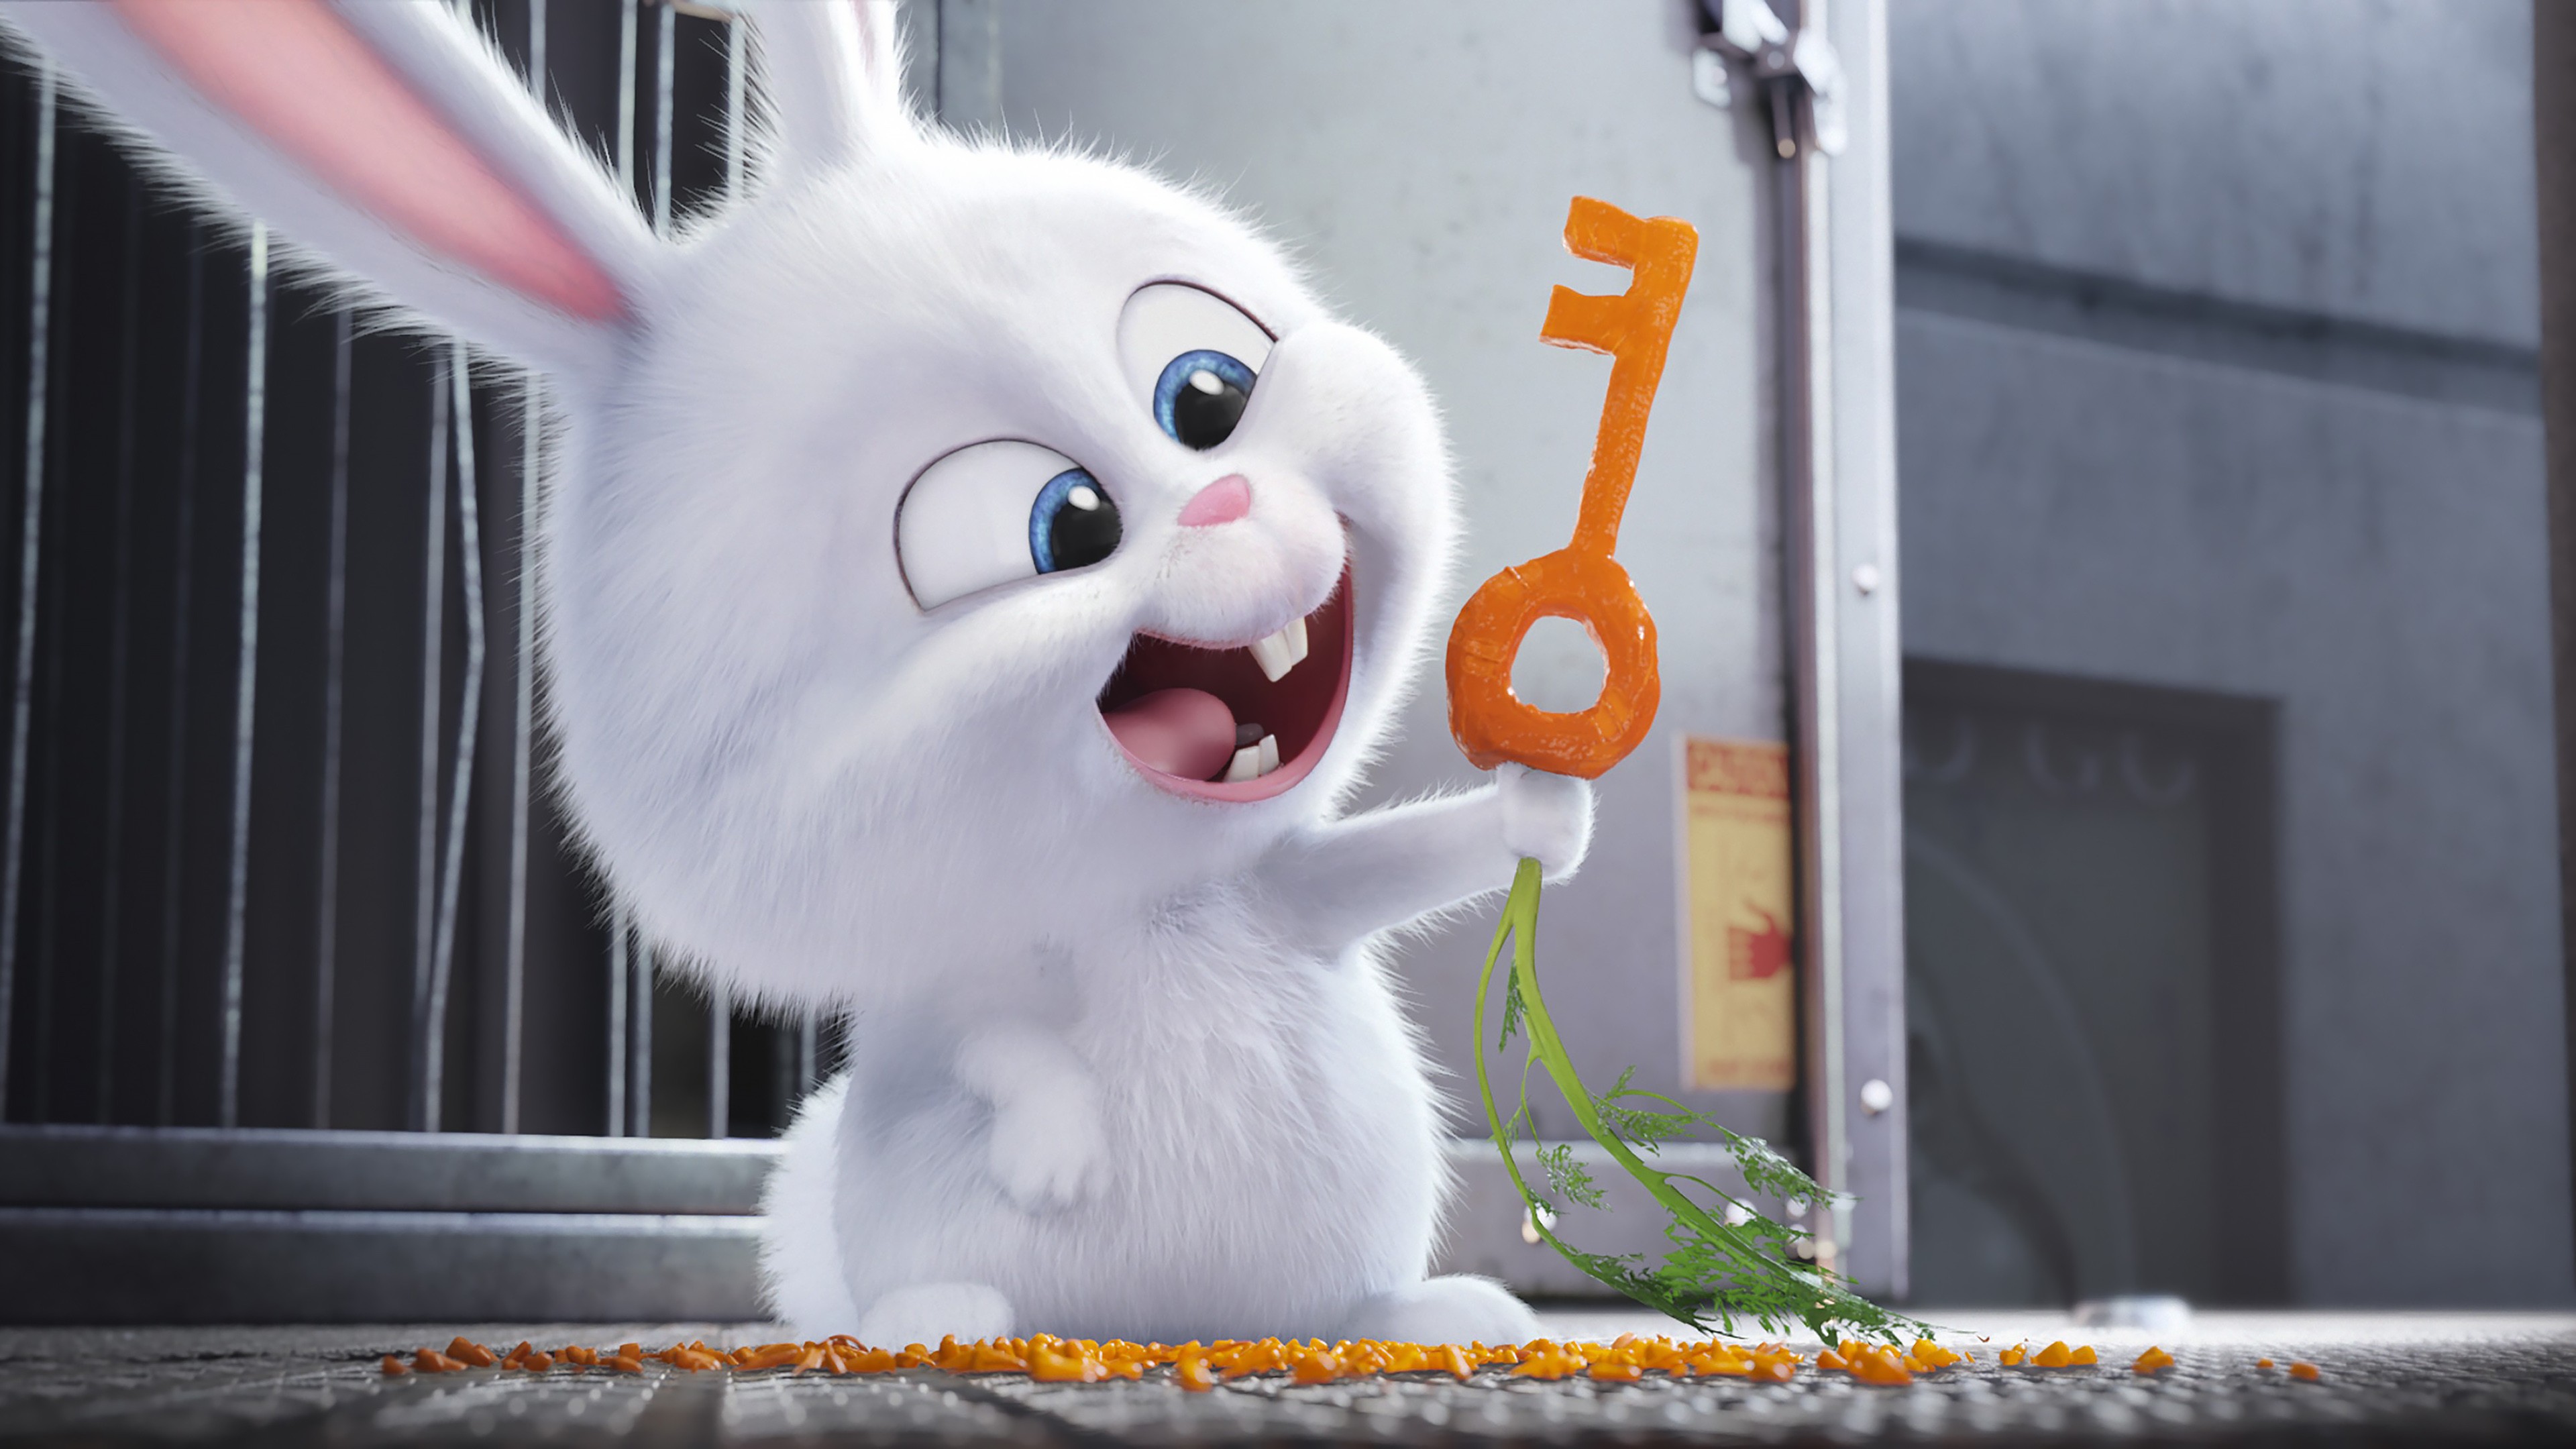 General 3840x2160 movies rabbits The Secret Life of Pets movie scenes carrots keys animals